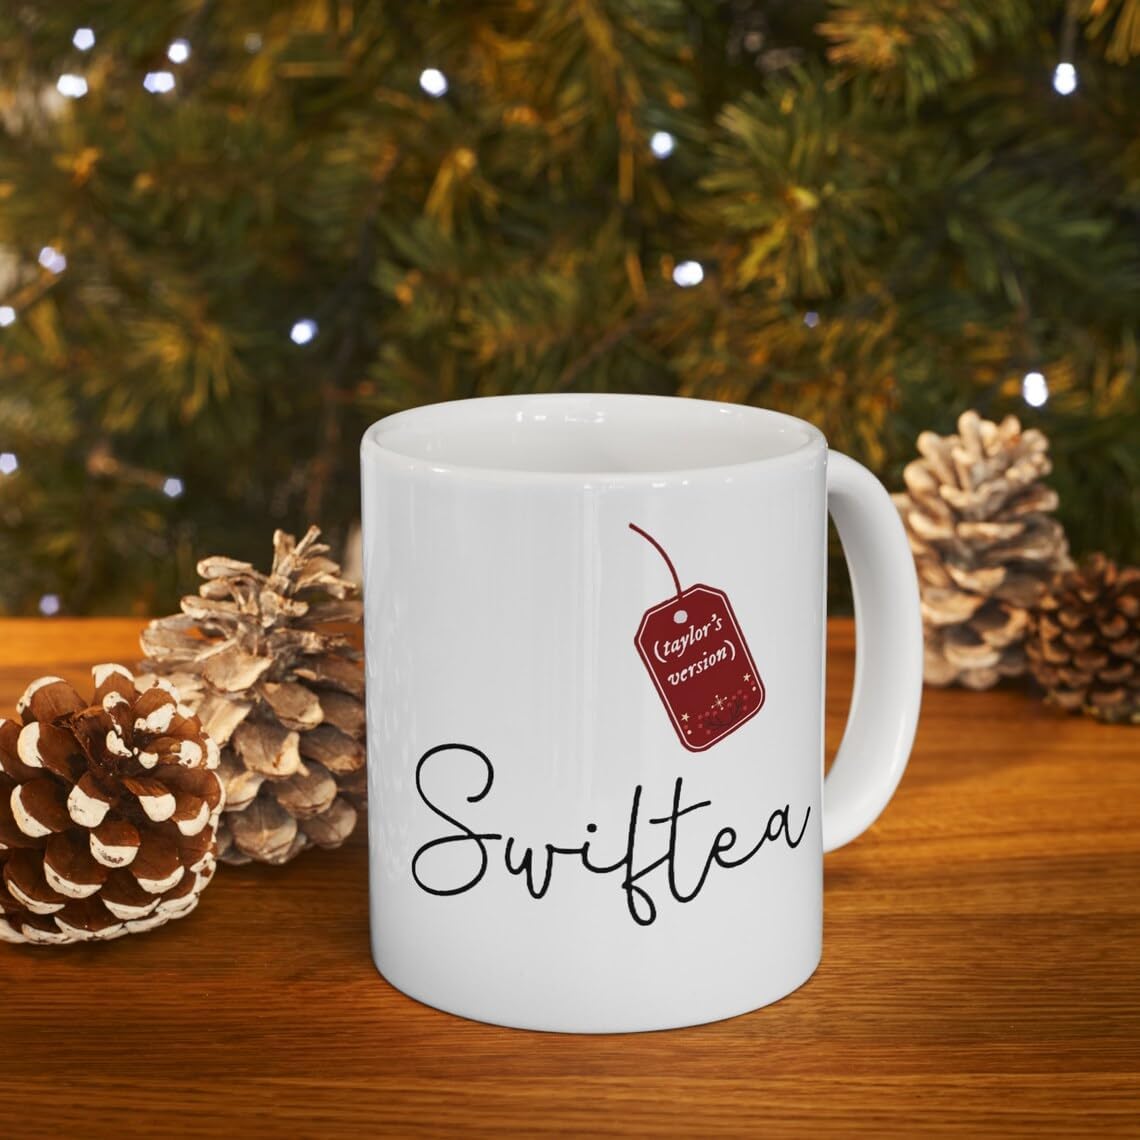 Swiftie Cup - Cups Taylor Swift For Fan Gifts - Taylor Swift Mug - Singer Album Coffee Mug for Singer Fans